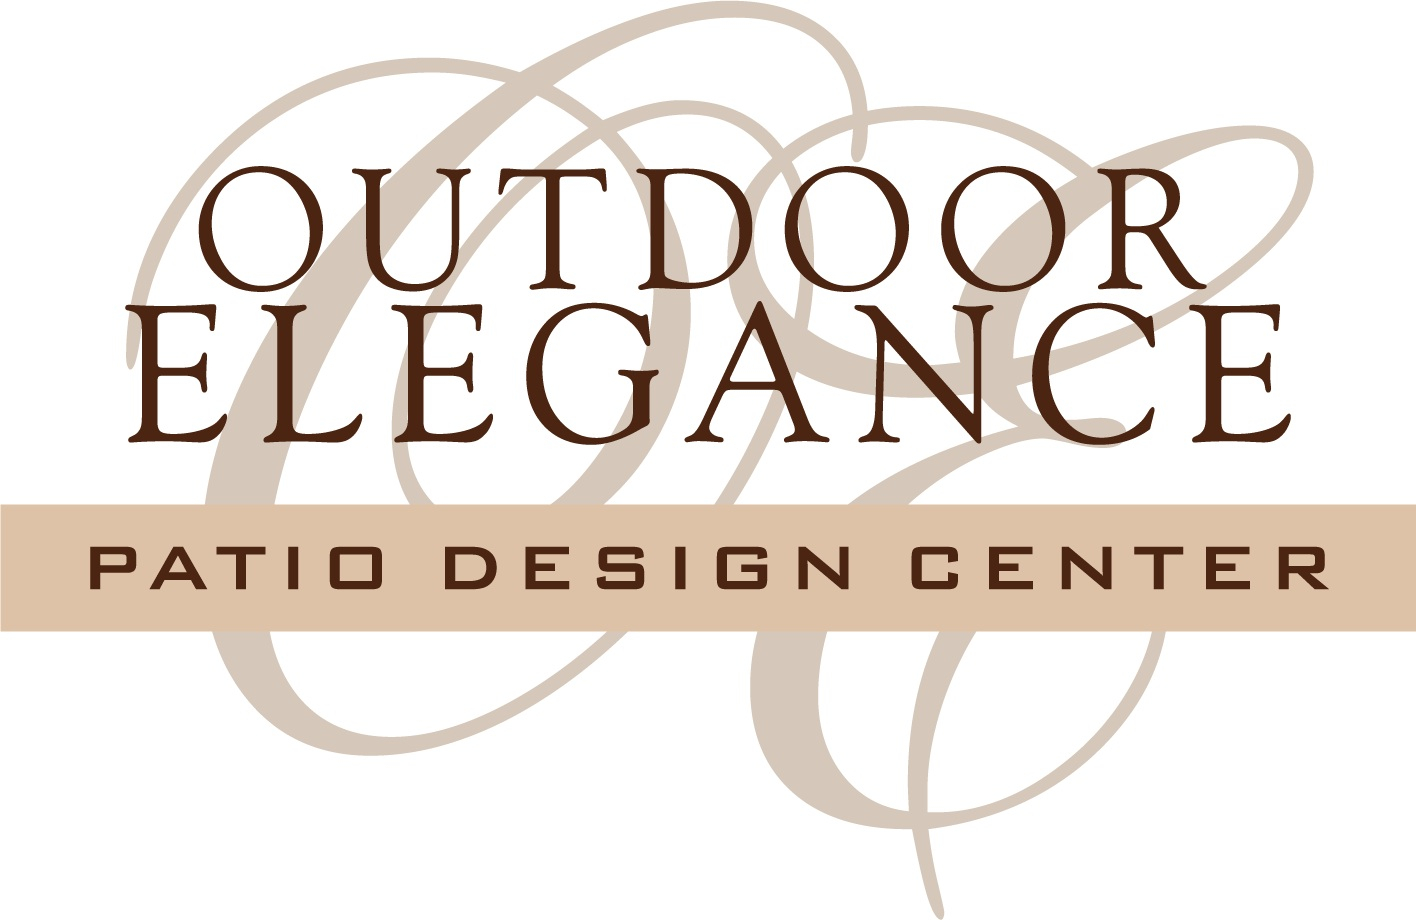 Outdoor Elegance Patio Design Center in measurements 1416 X 920